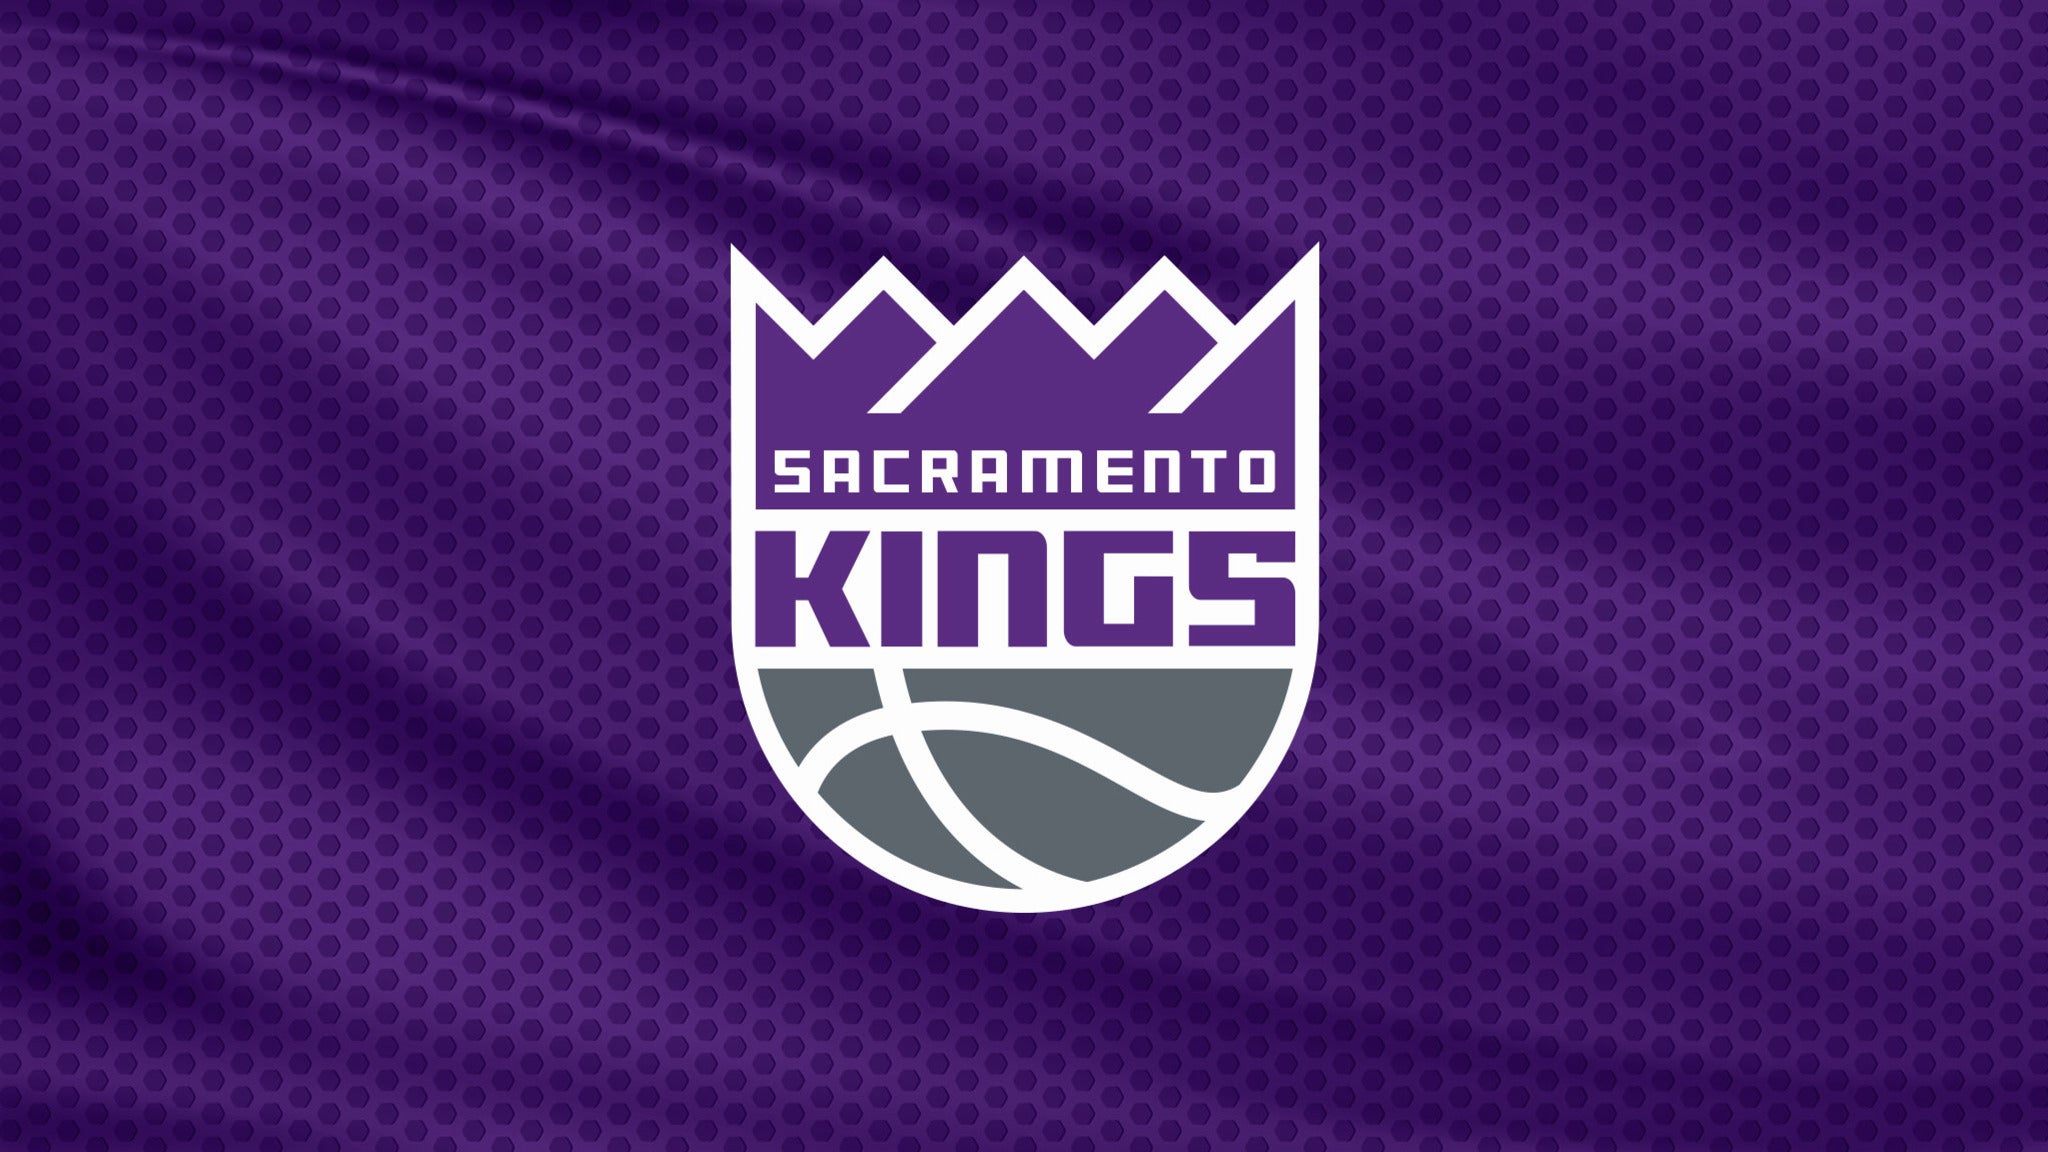 Sacramento Kings vs Portland Trail Blazers